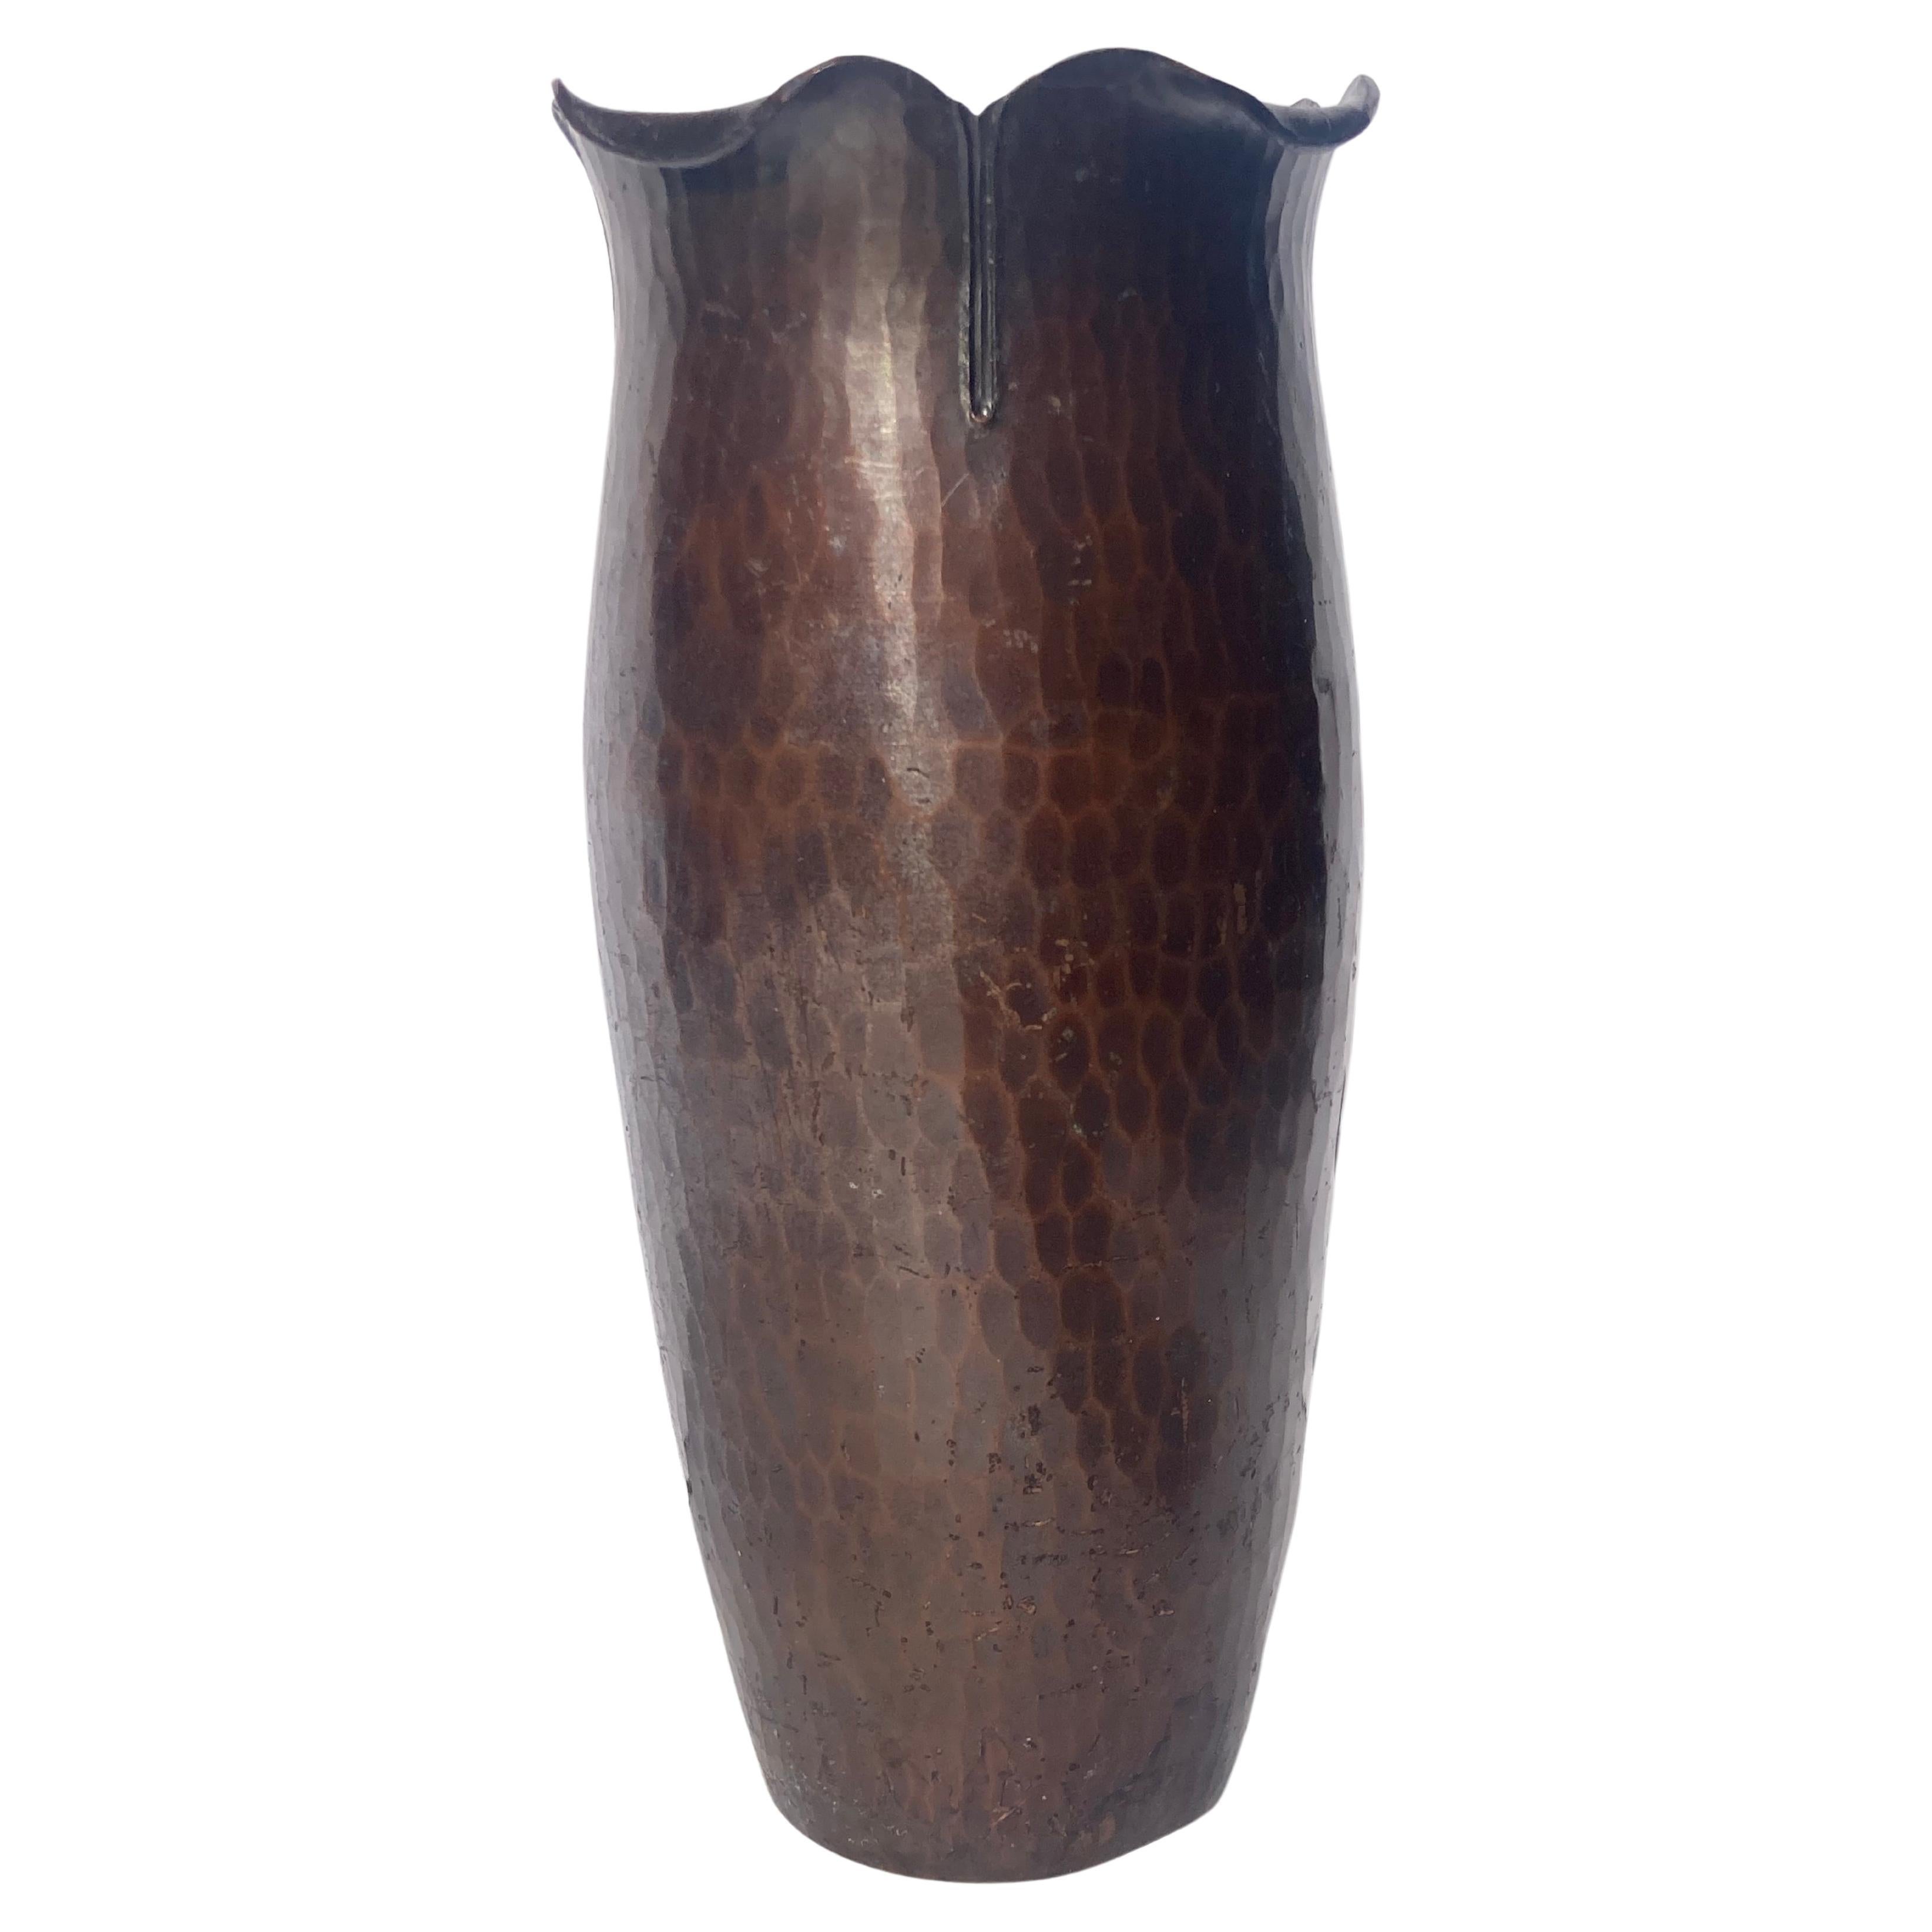 Roycroft Hammered Copper Vase, Arts and Crafts Movement, Brown Patina im Angebot